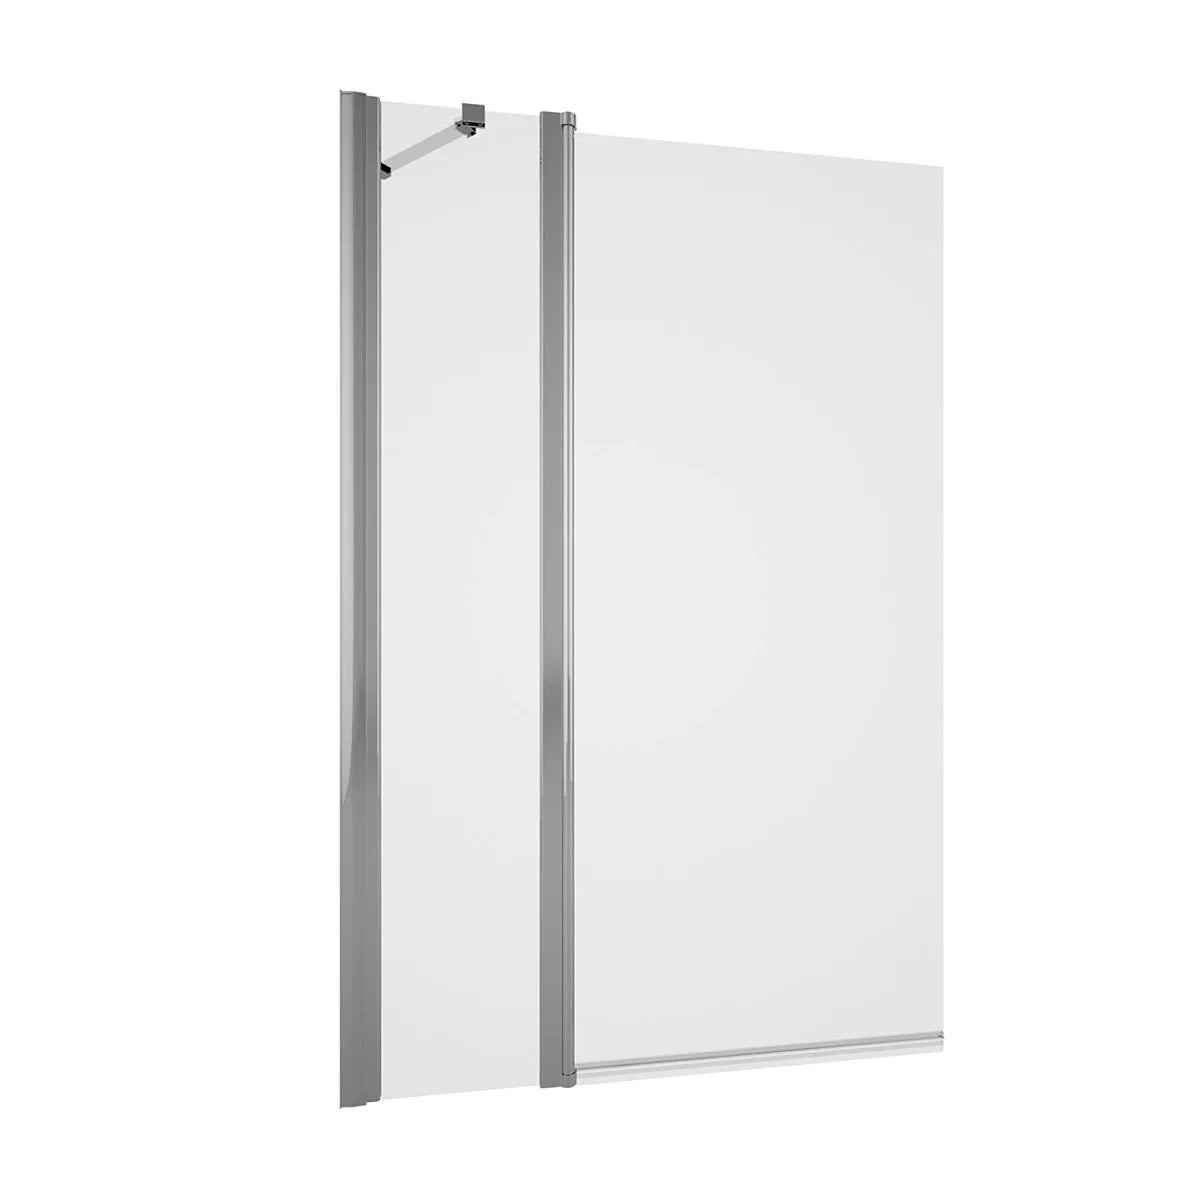 Messina Double panel rectangular bath screen